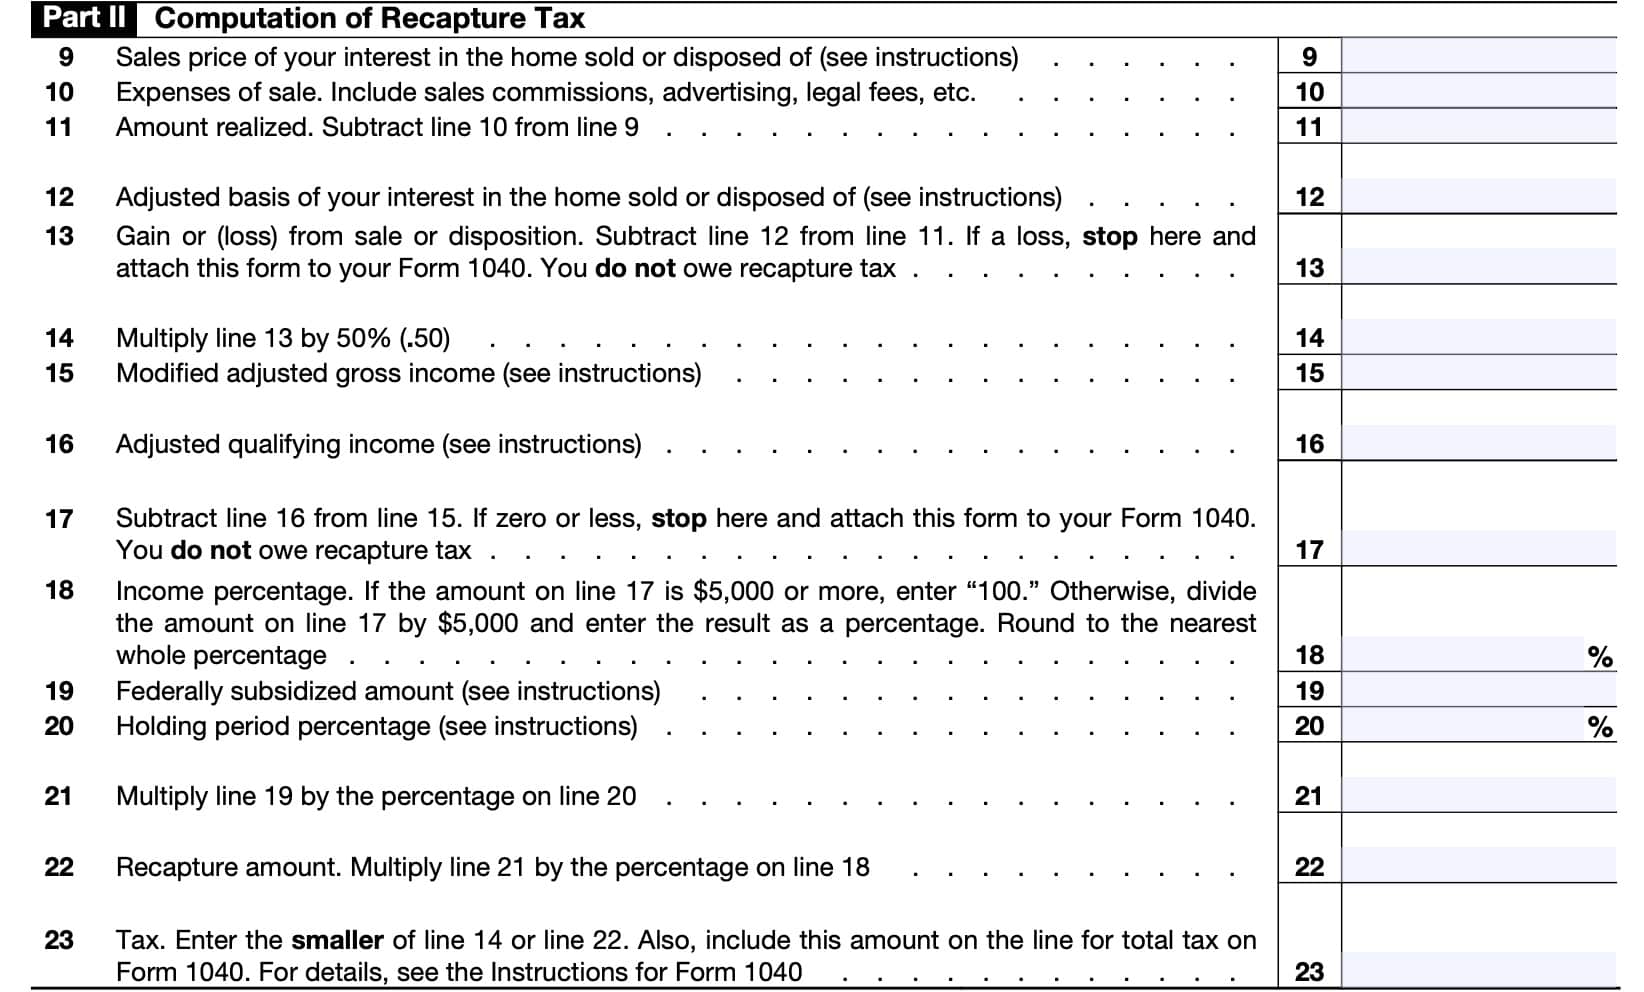 irs form 8828 part ii: computation of recapture tax